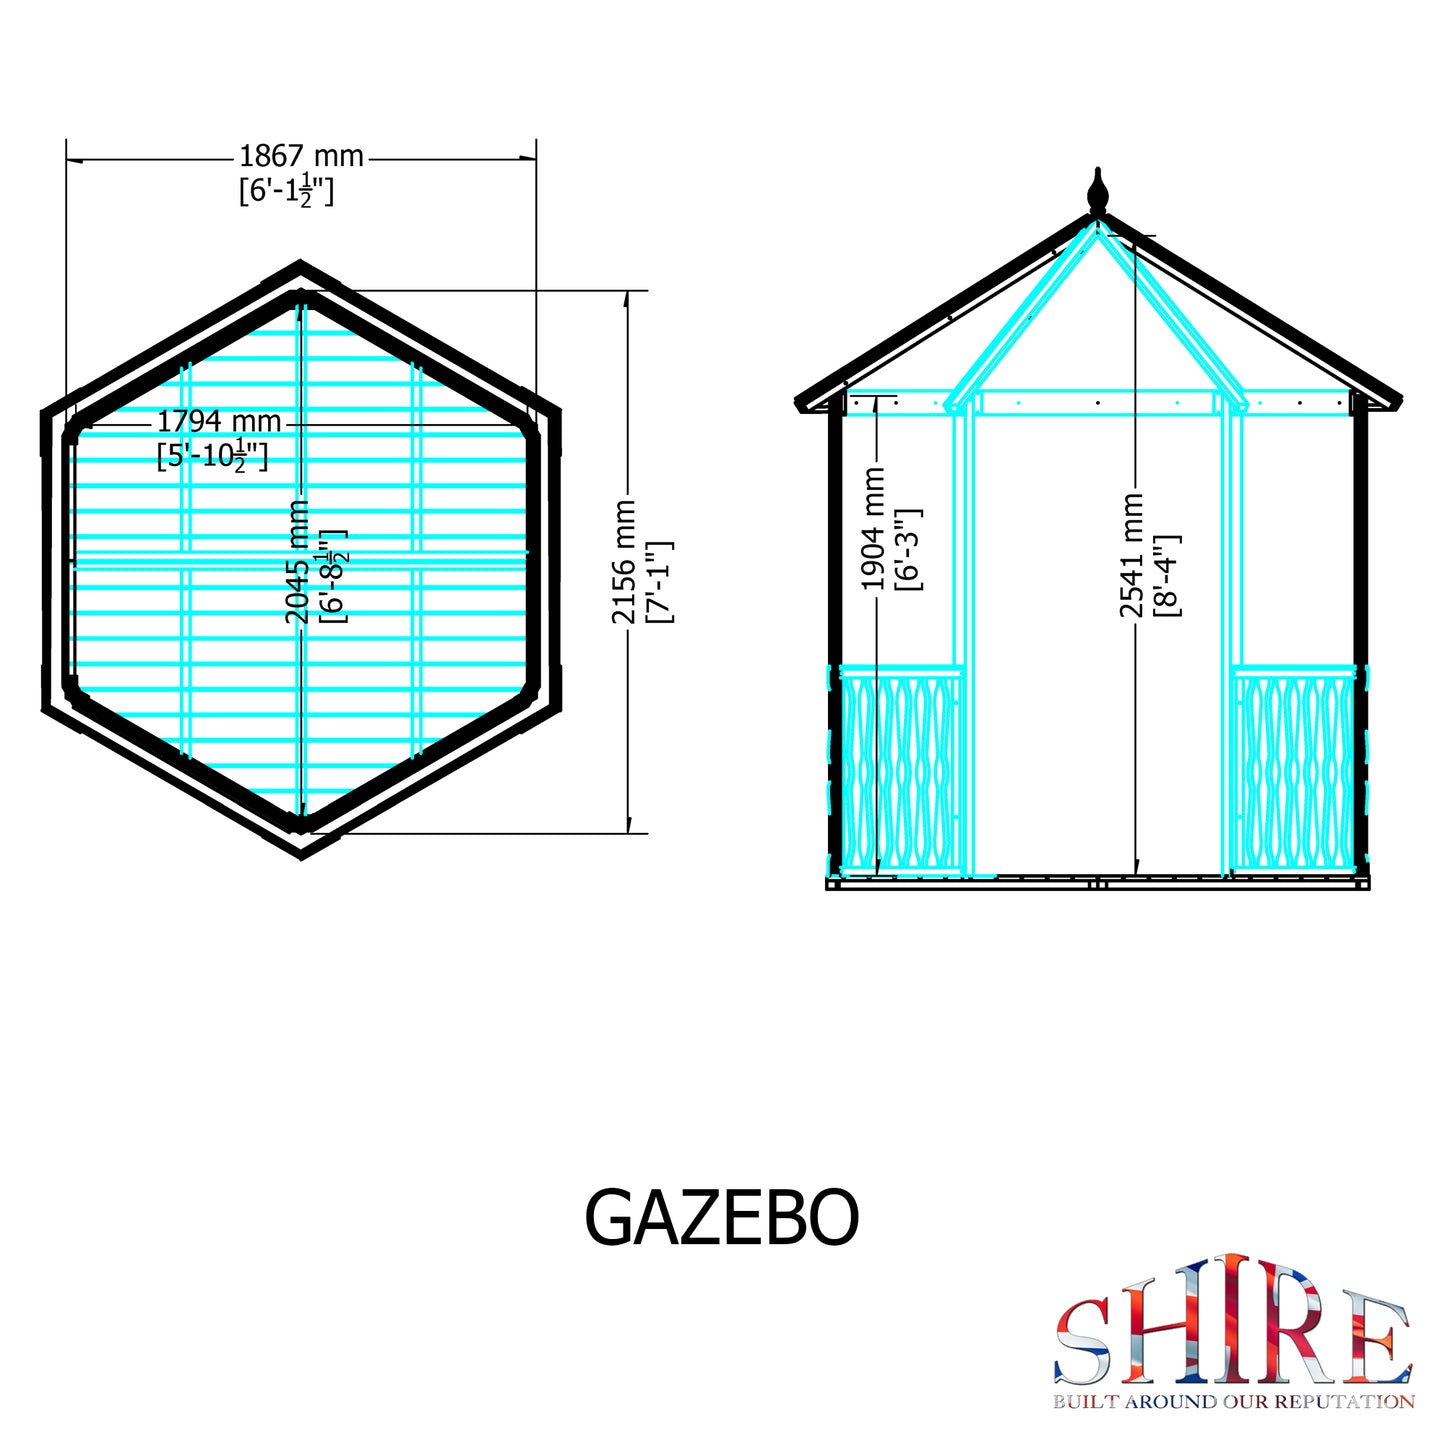 Shire 6 X 6 Gazebo Summerhouse Pressure Treated - Premium Garden